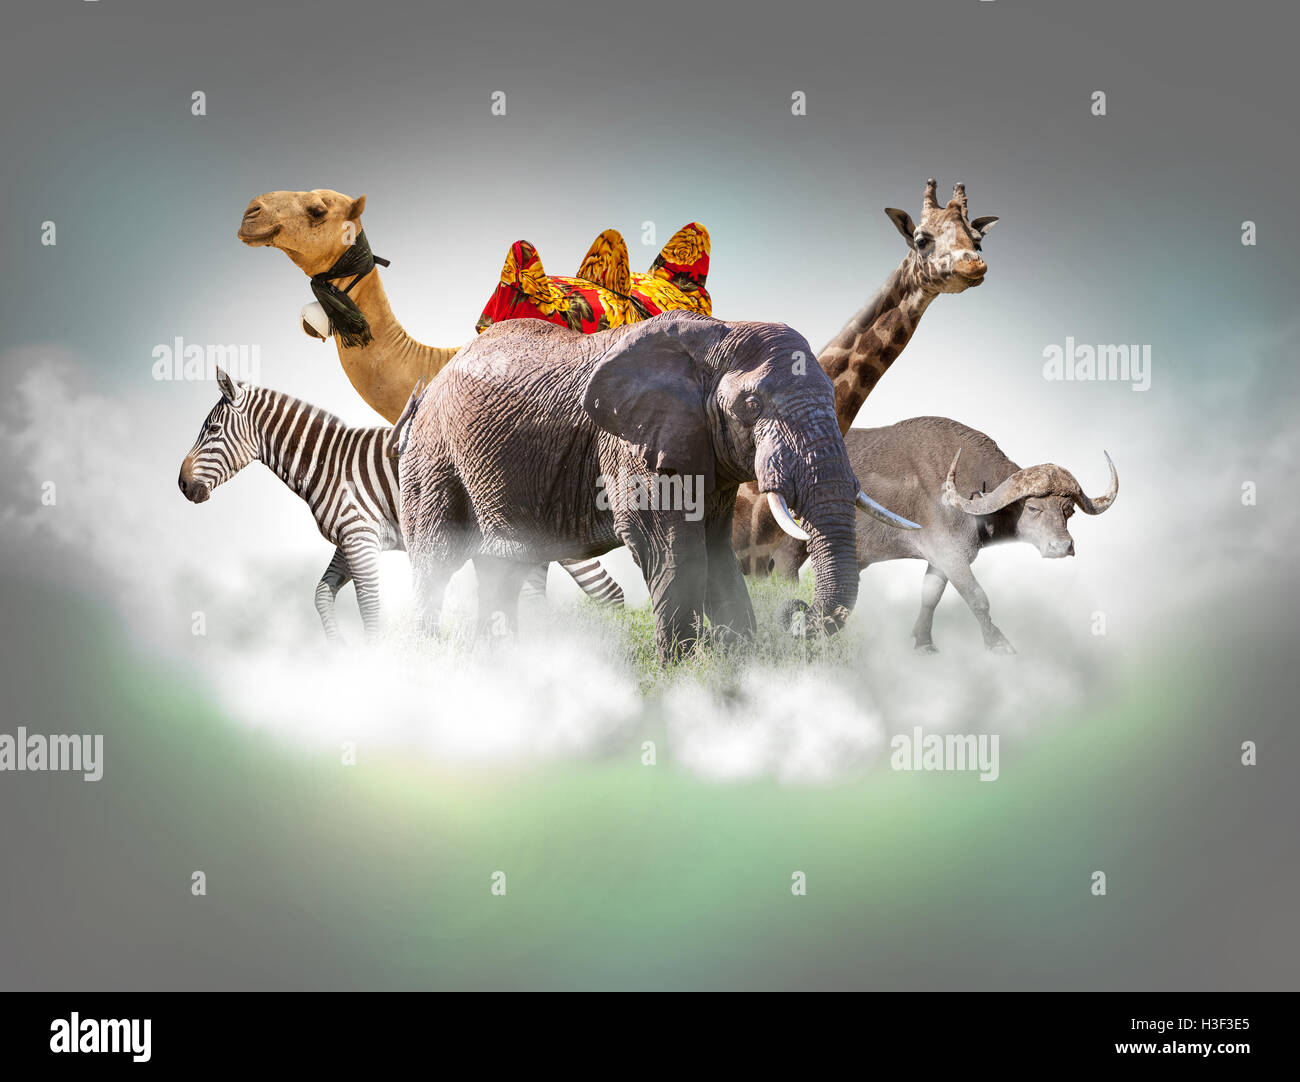 Wild animals group - giraffe, elephant, zebra above white clouds in gray sky Stock Photo